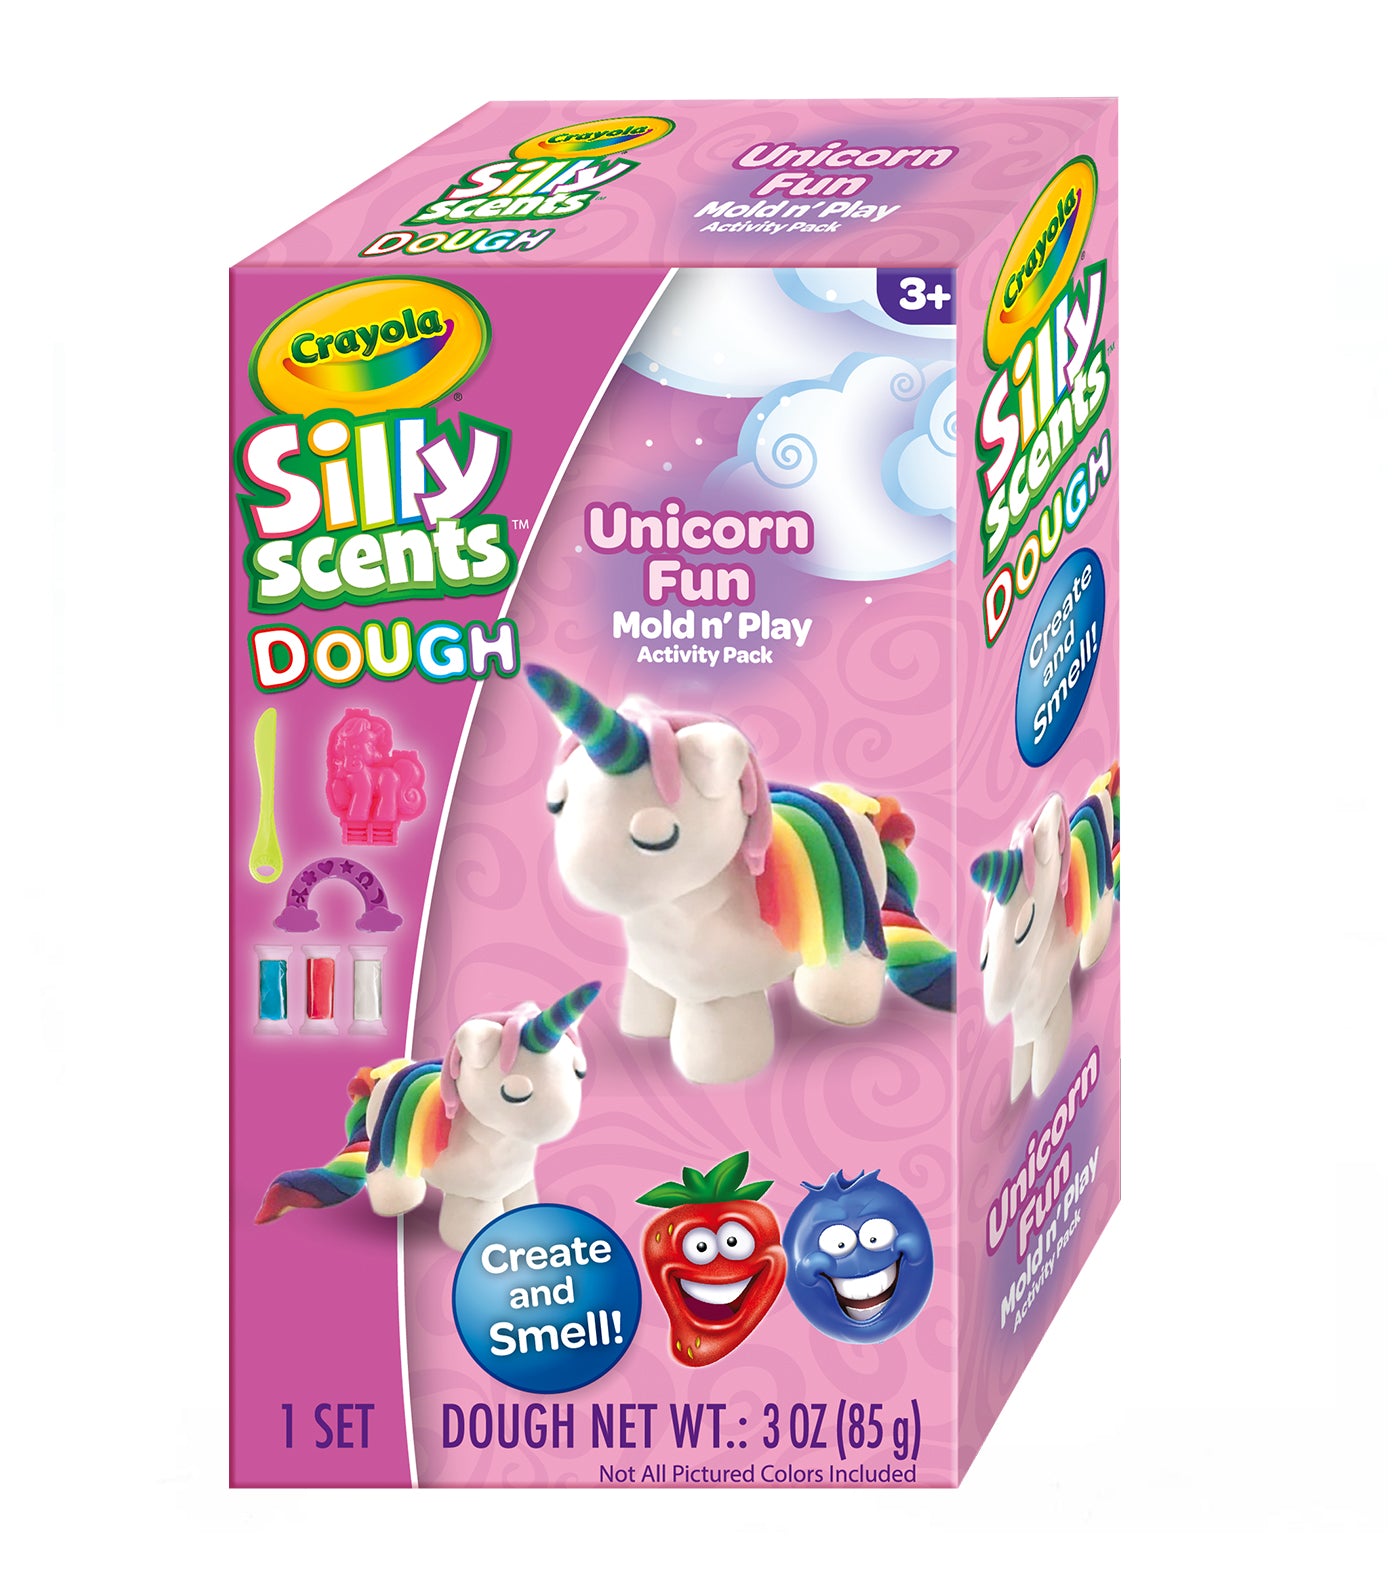 Silly Scents Dough - Unicorn Fun